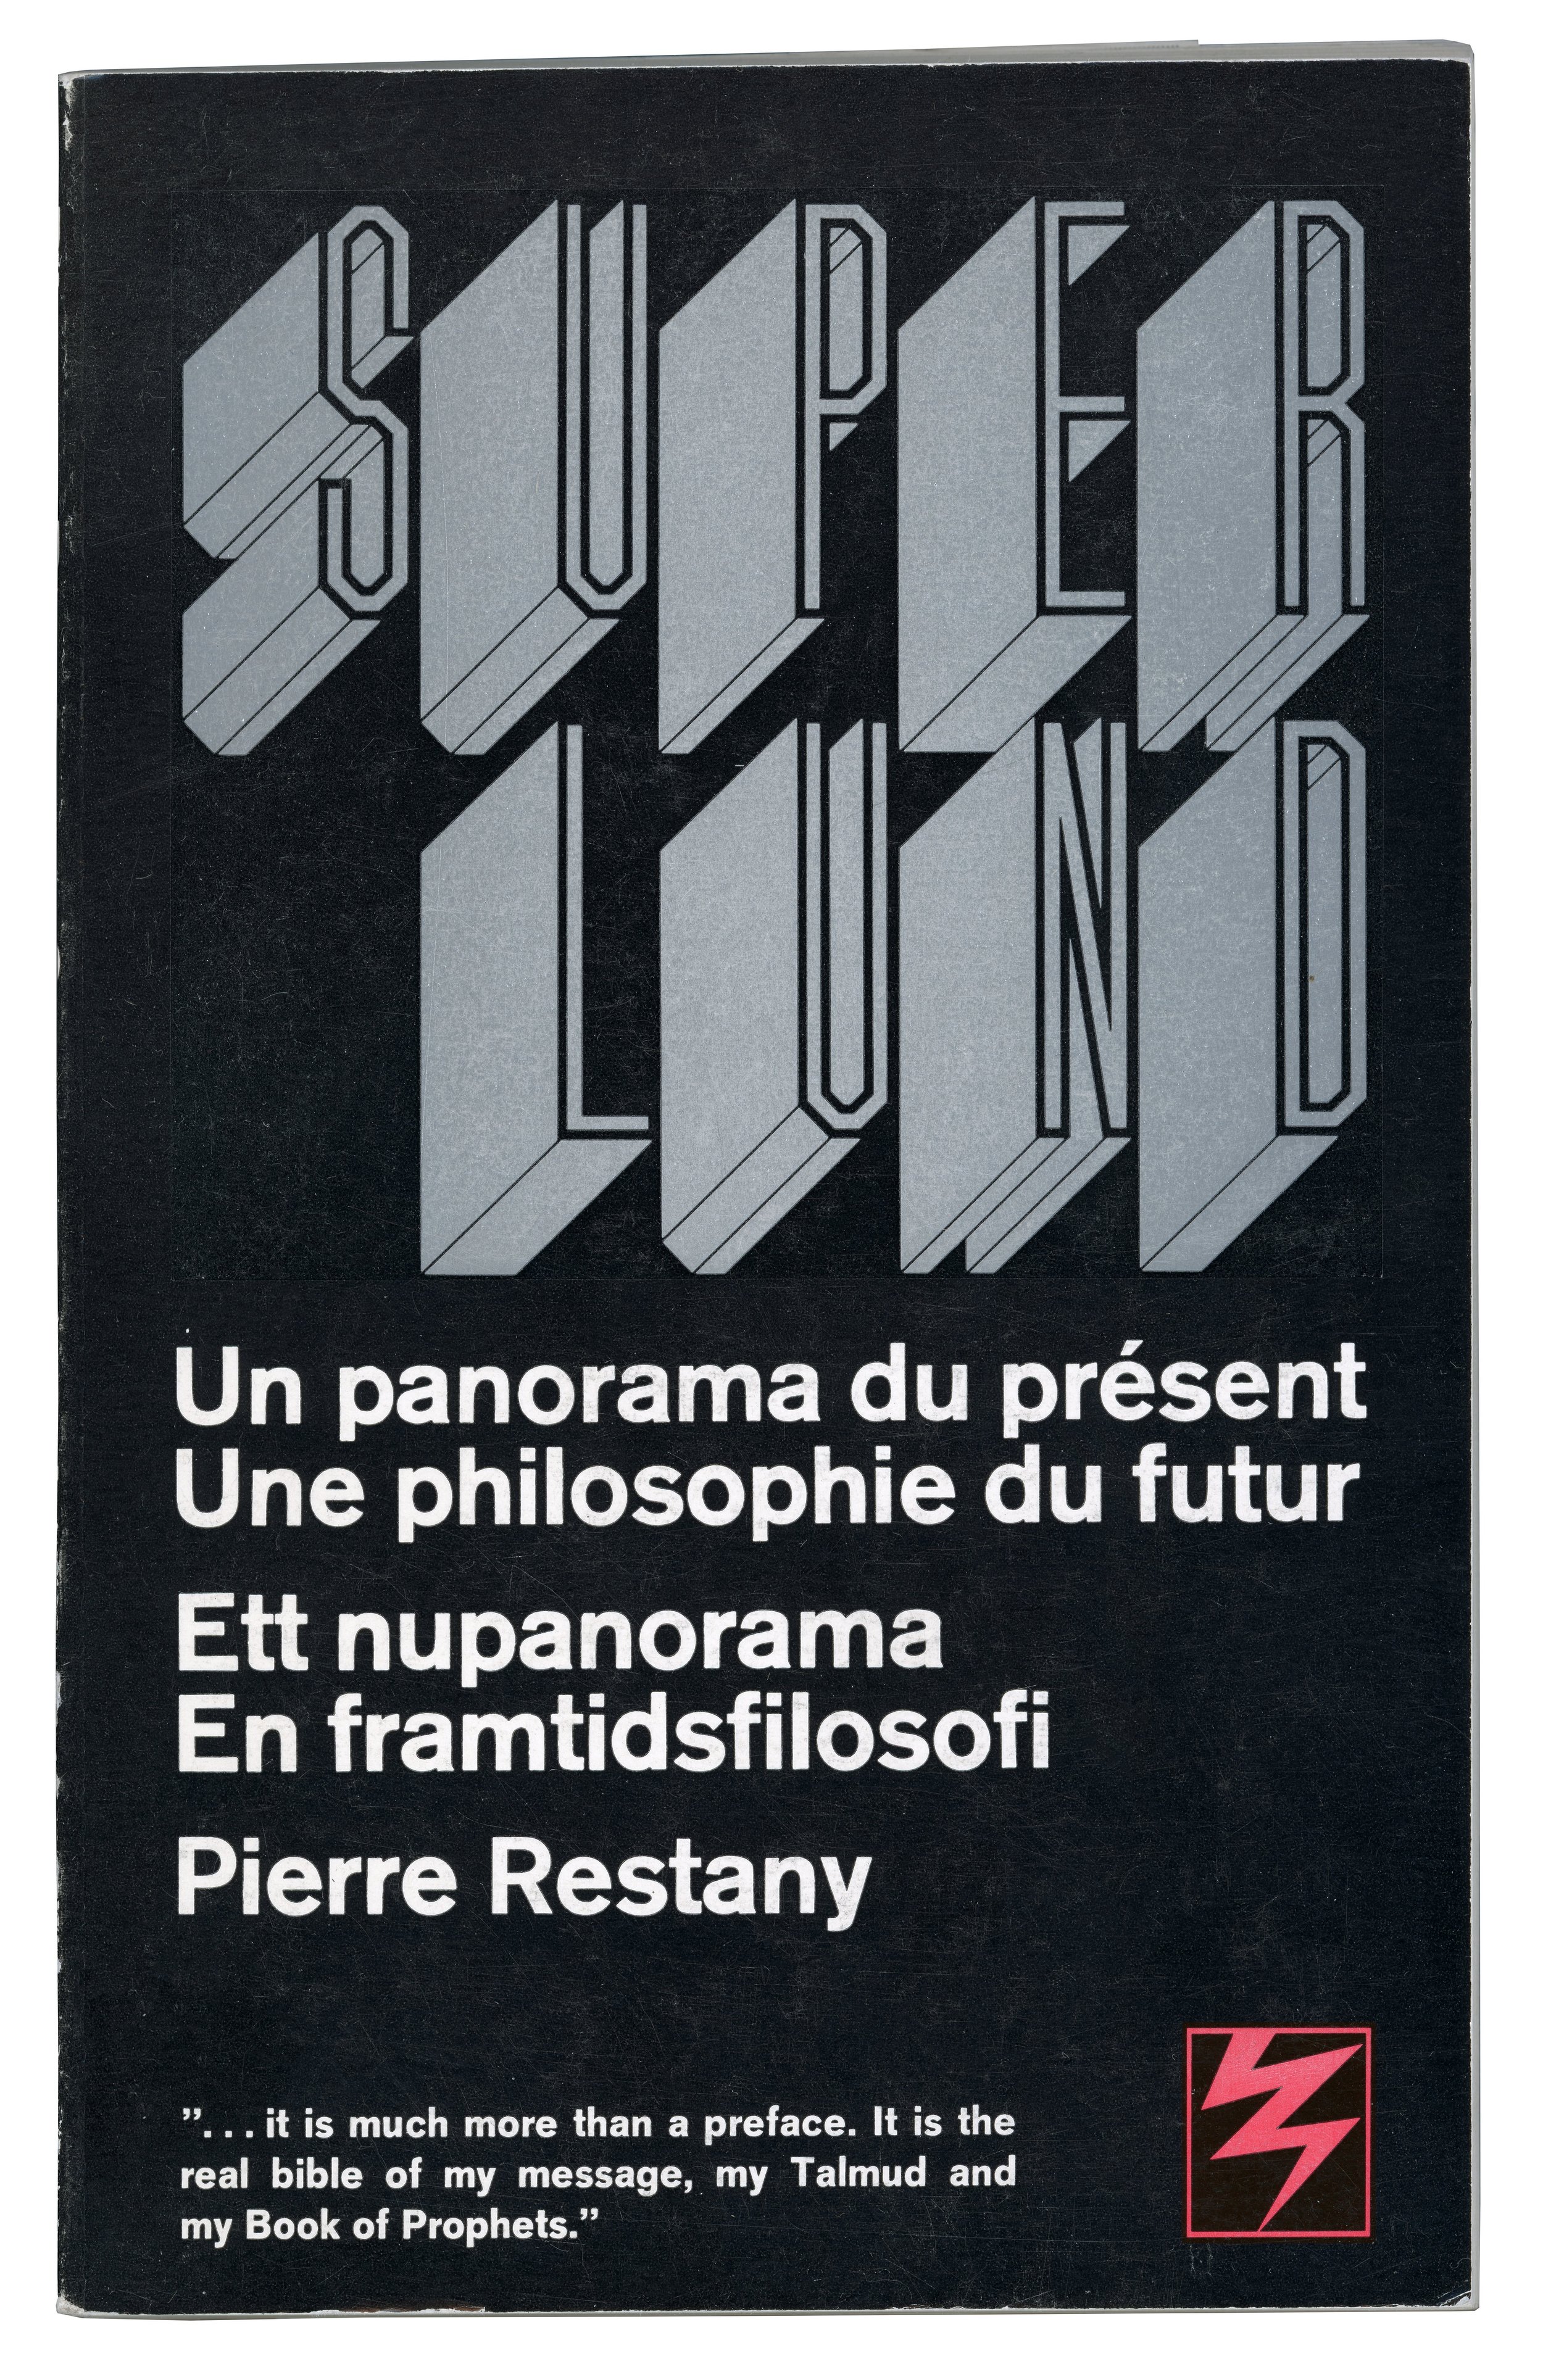 Lunds-konsthall-Superlund-1967-edit (Kopia).jpg